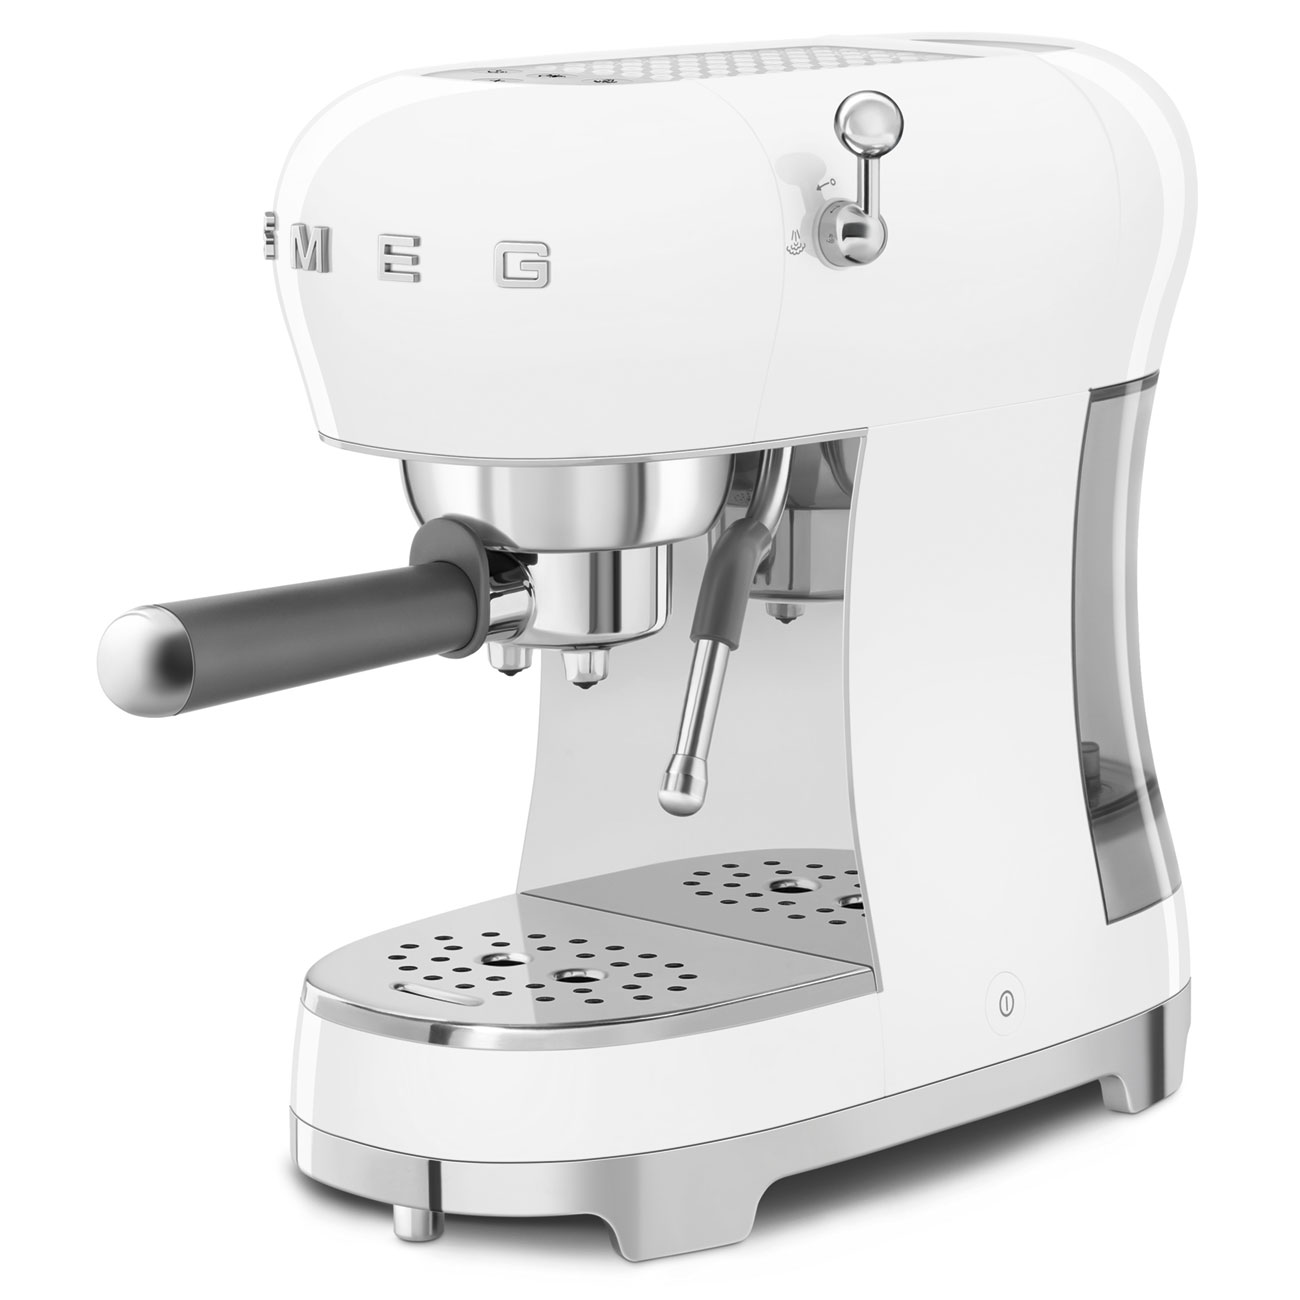 Smeg White Espresso Manual Coffee Machine with Steam Wand_4